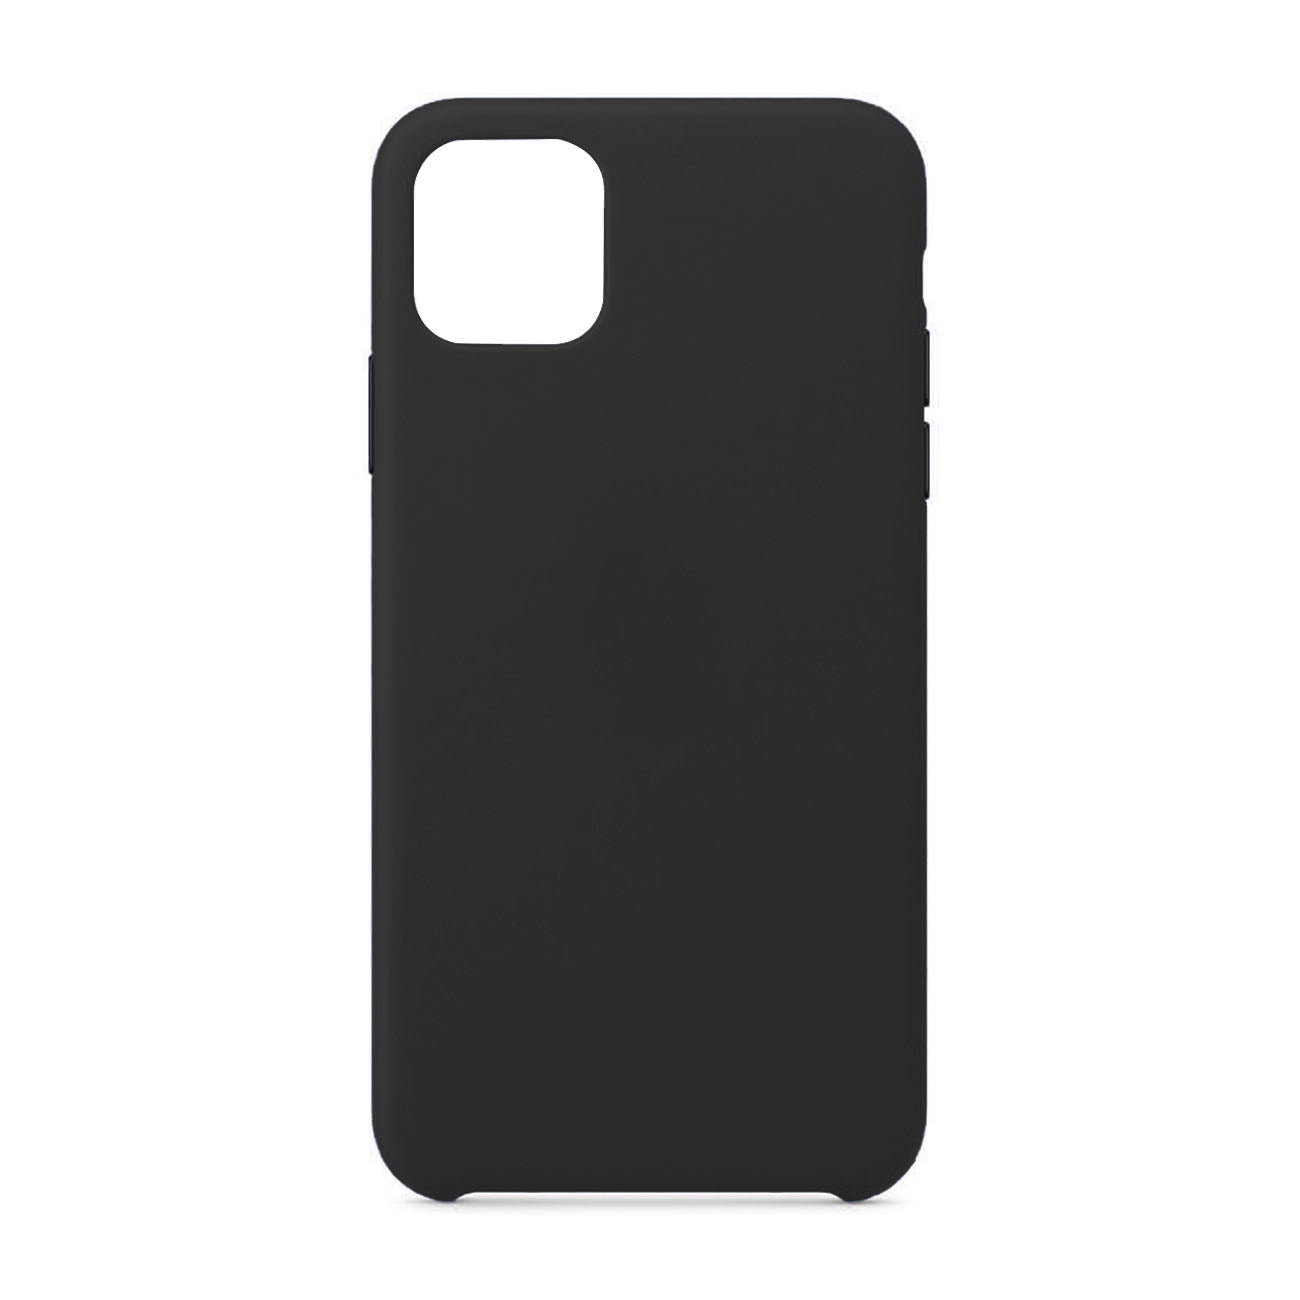 Apple iPhone 11 Pro Max Gummy Cases In Black